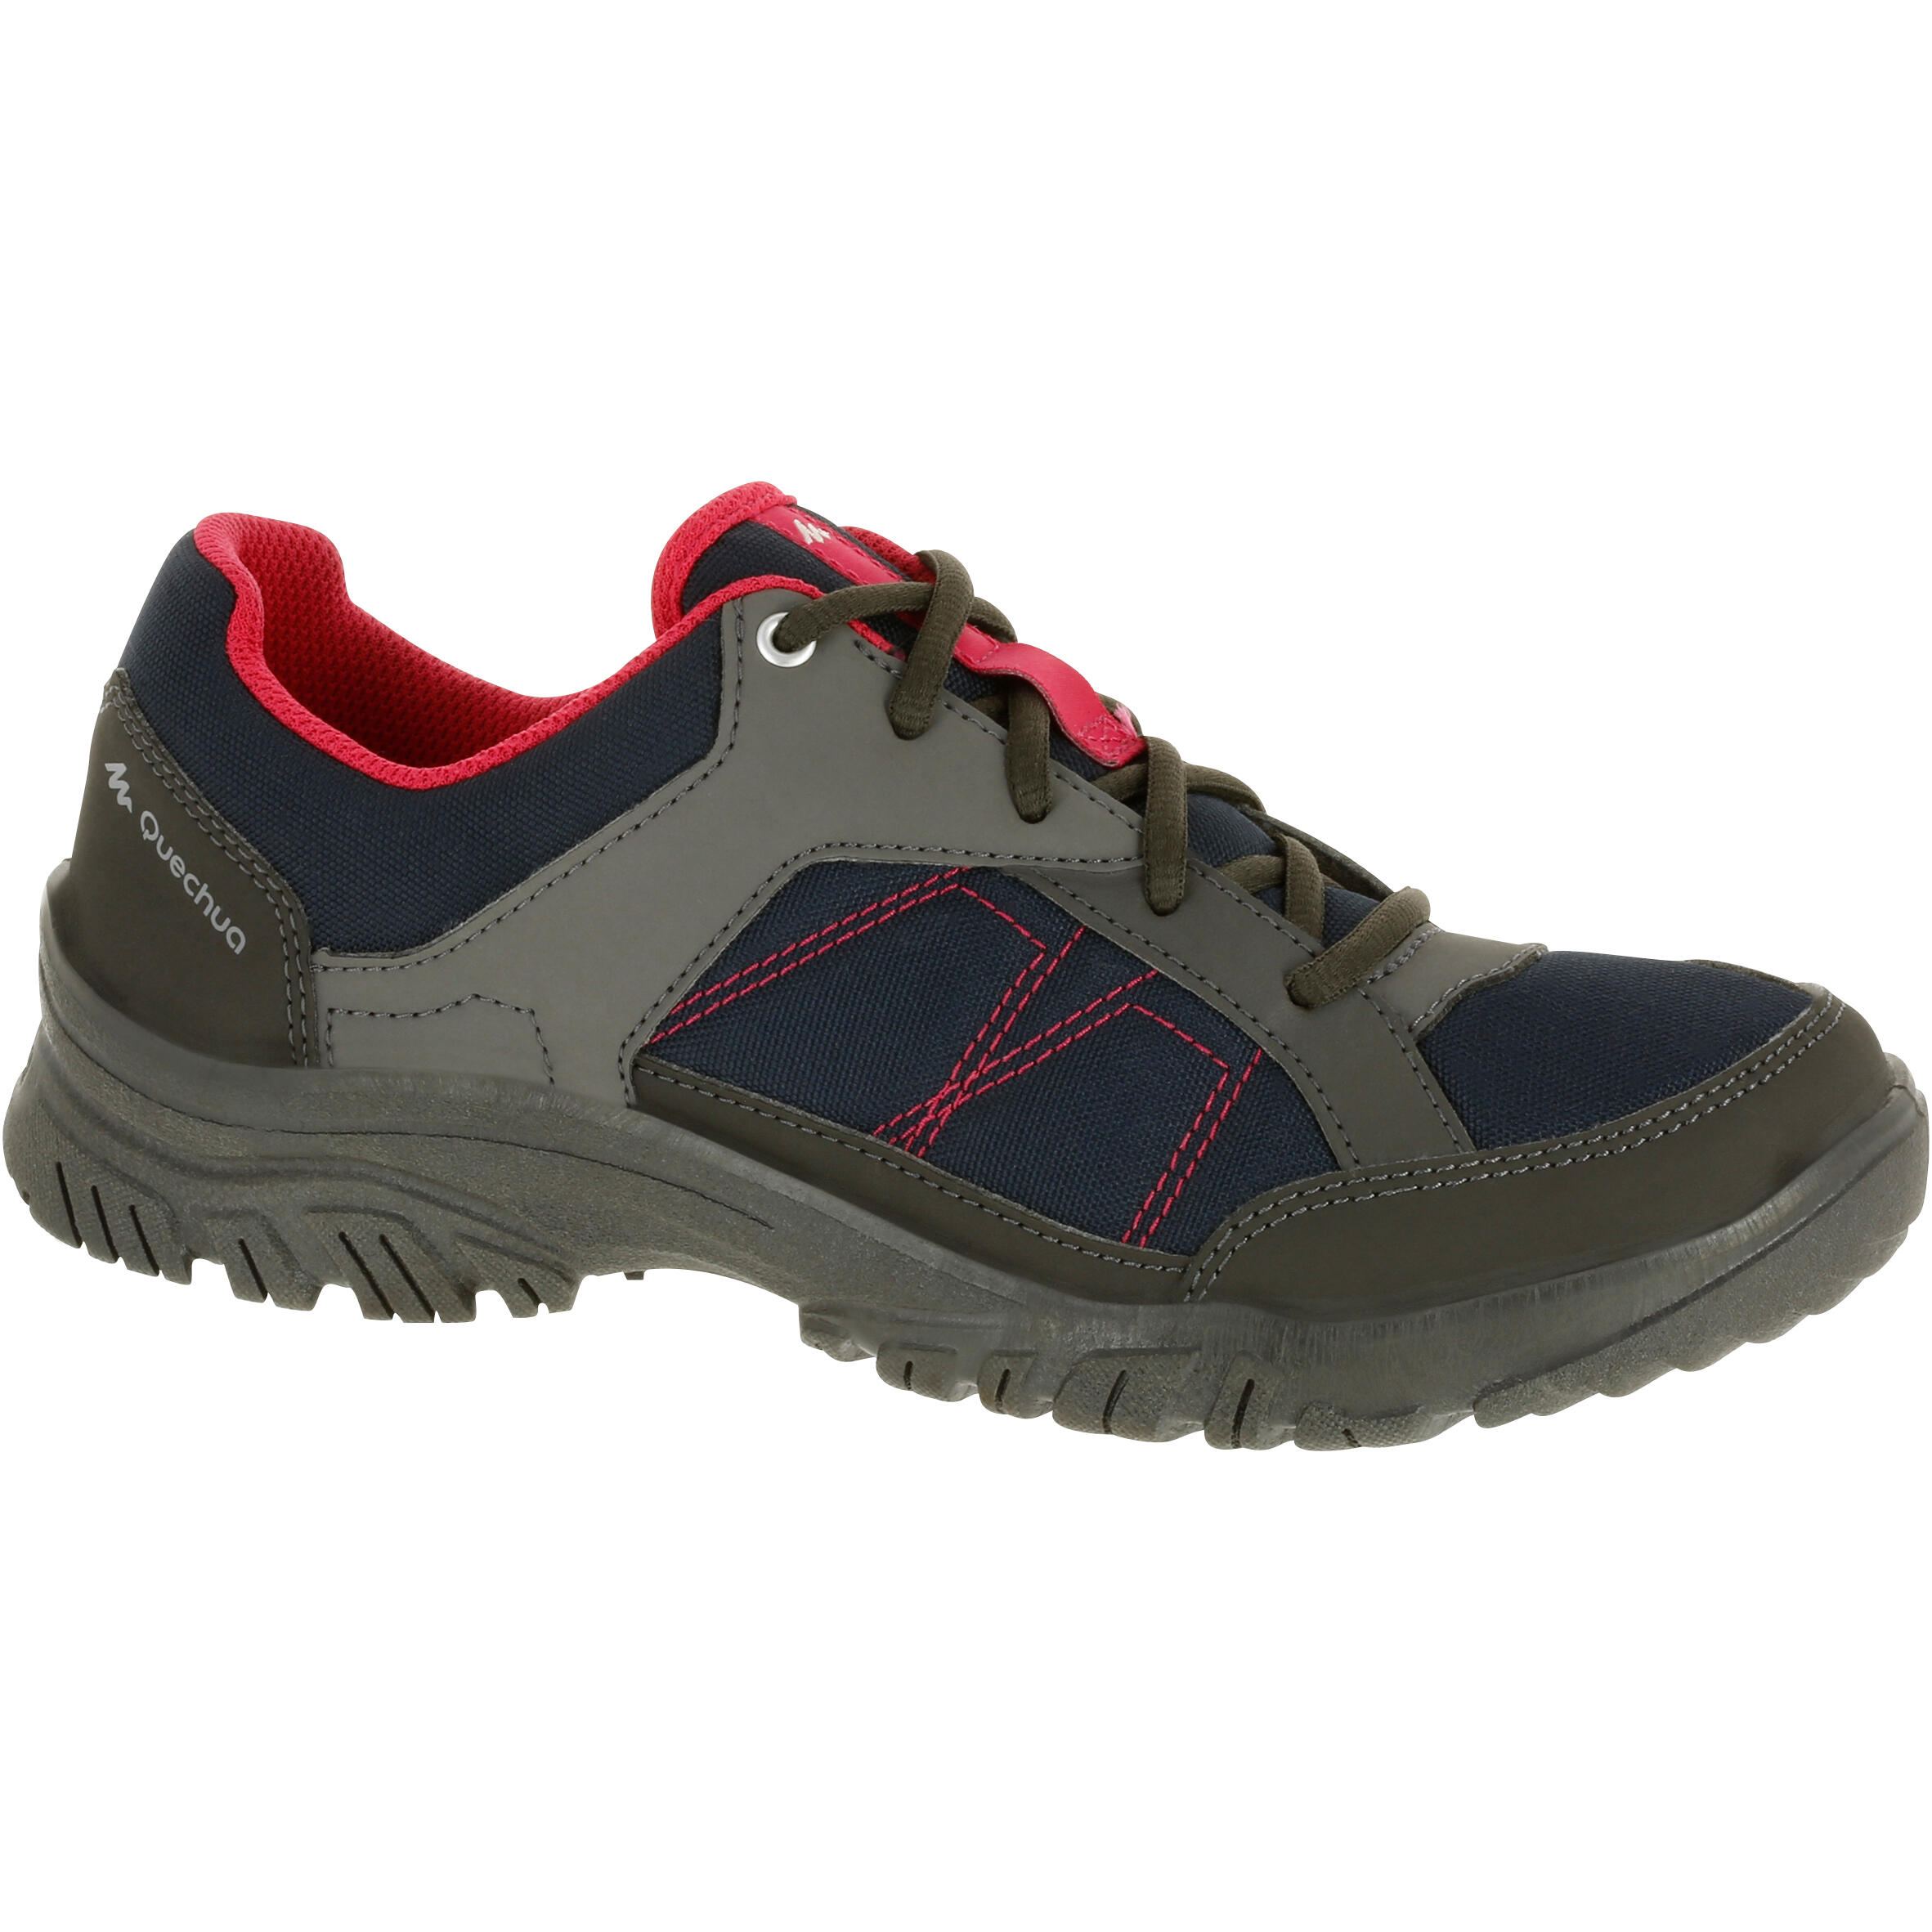 decathlon hiking shoes